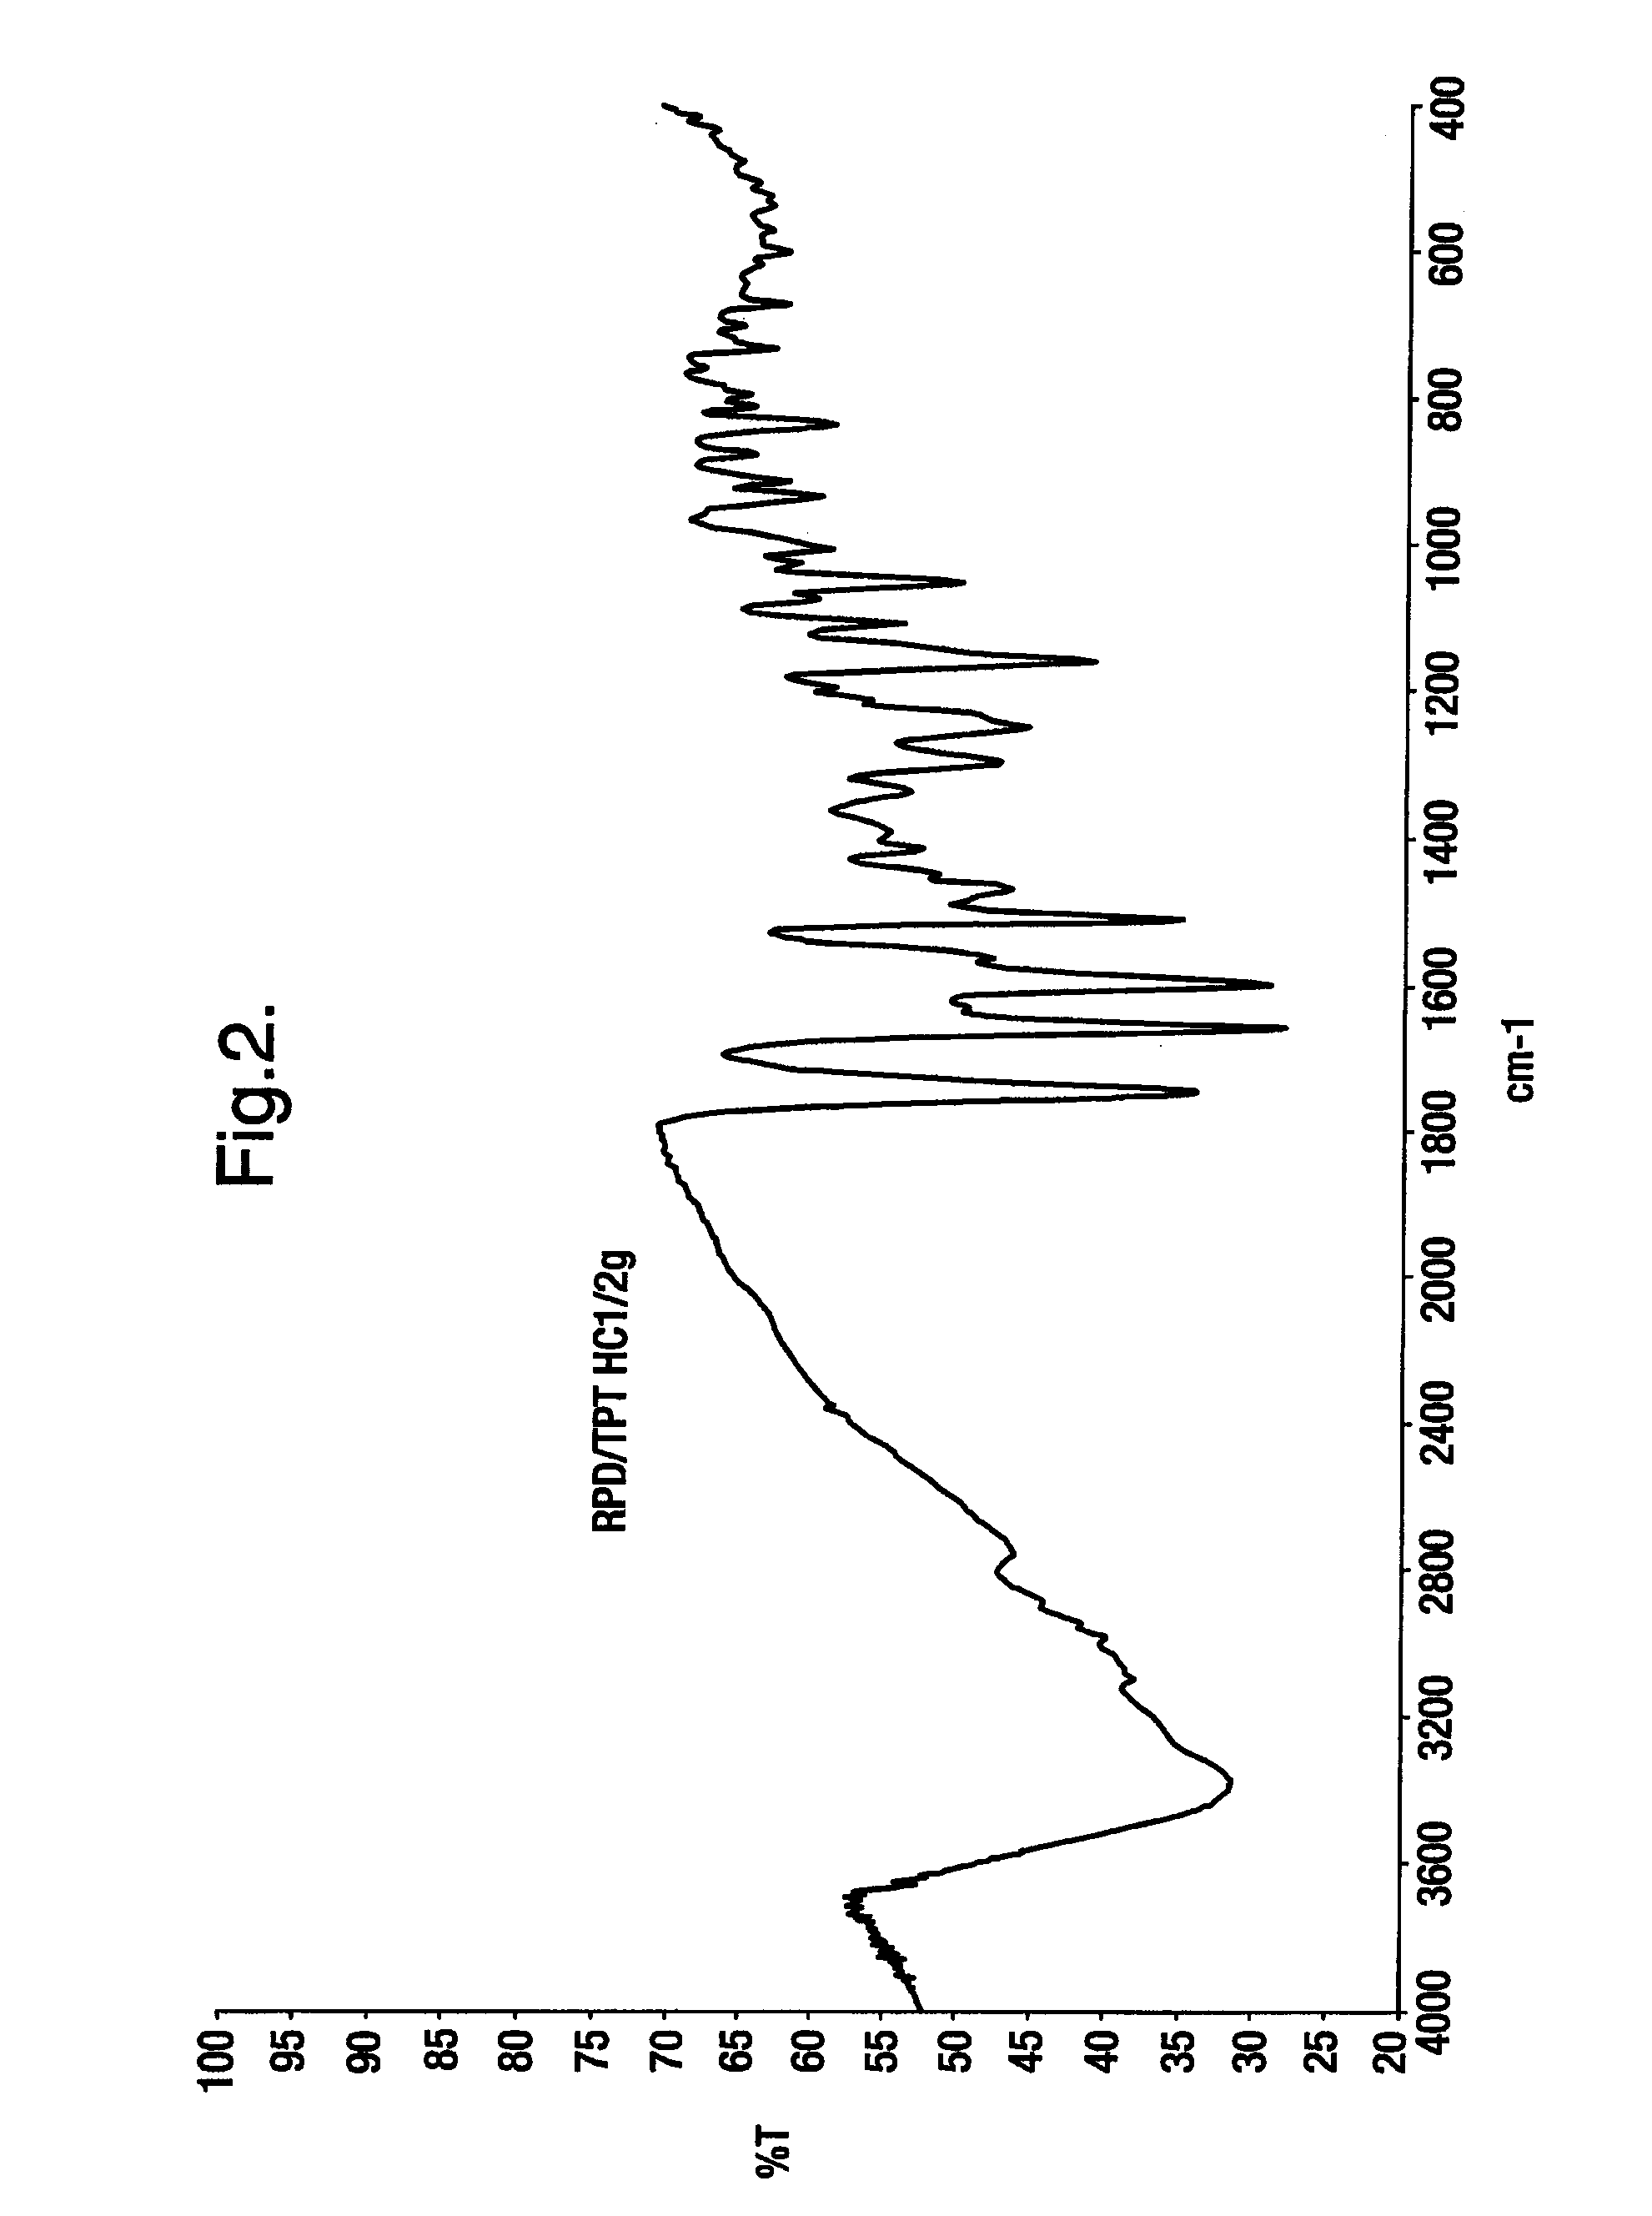 Novel crystalline polymorphic form of a camptothecin analogue